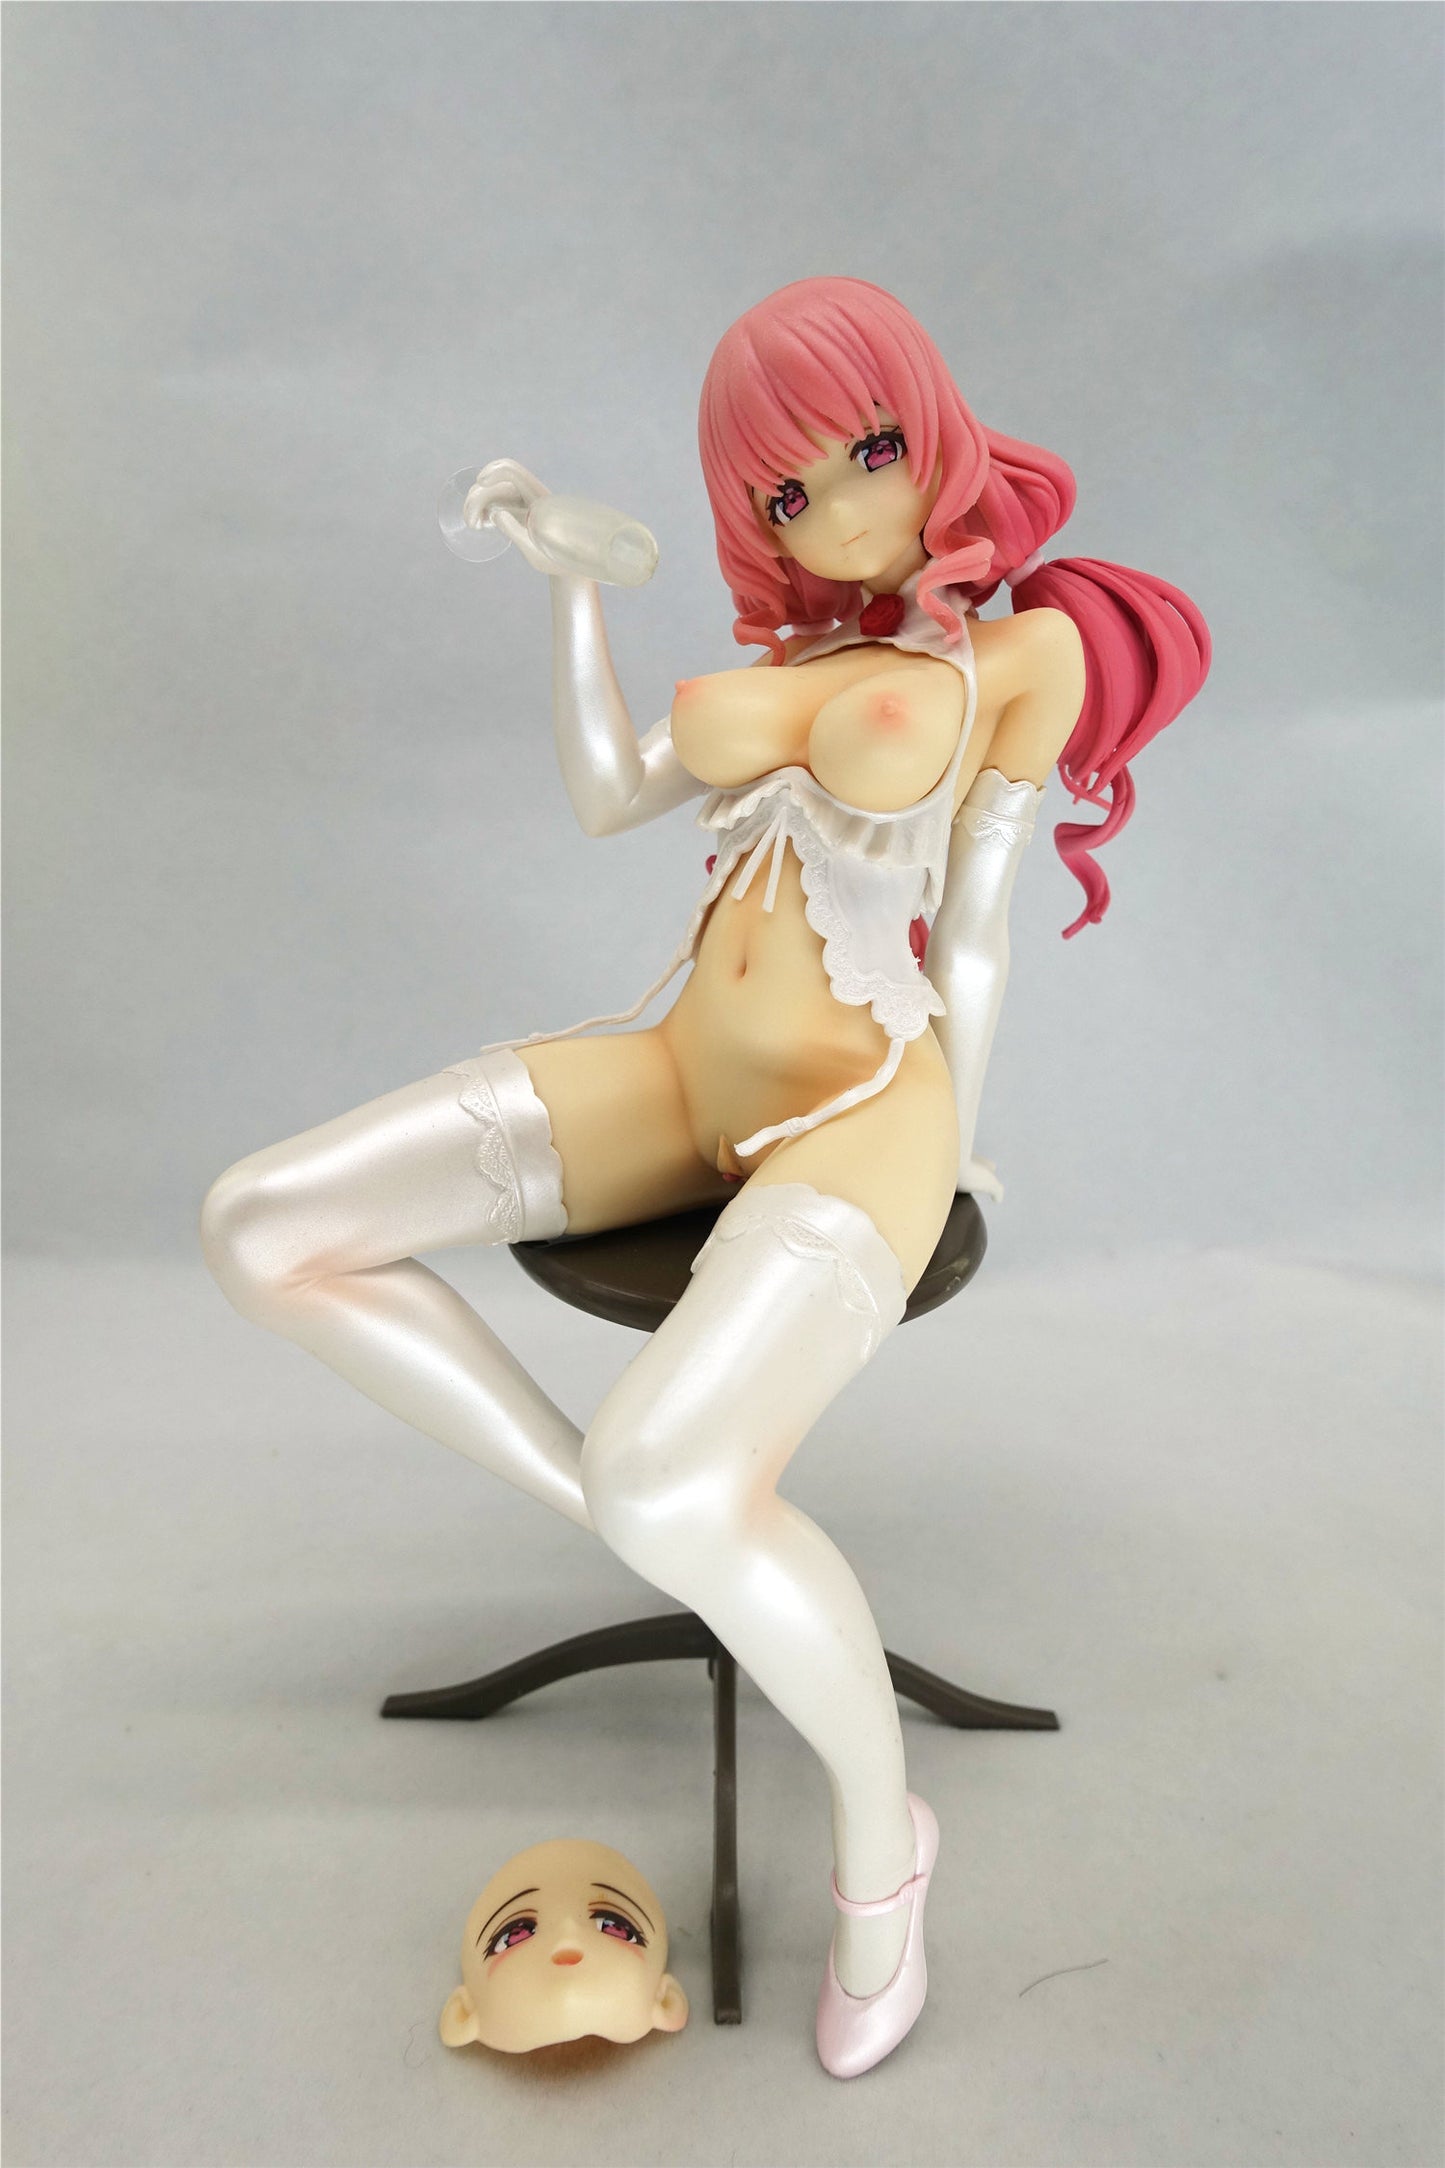 Shizuku Kamino huge breast illustration by Paseri 1/6 naked anime figure